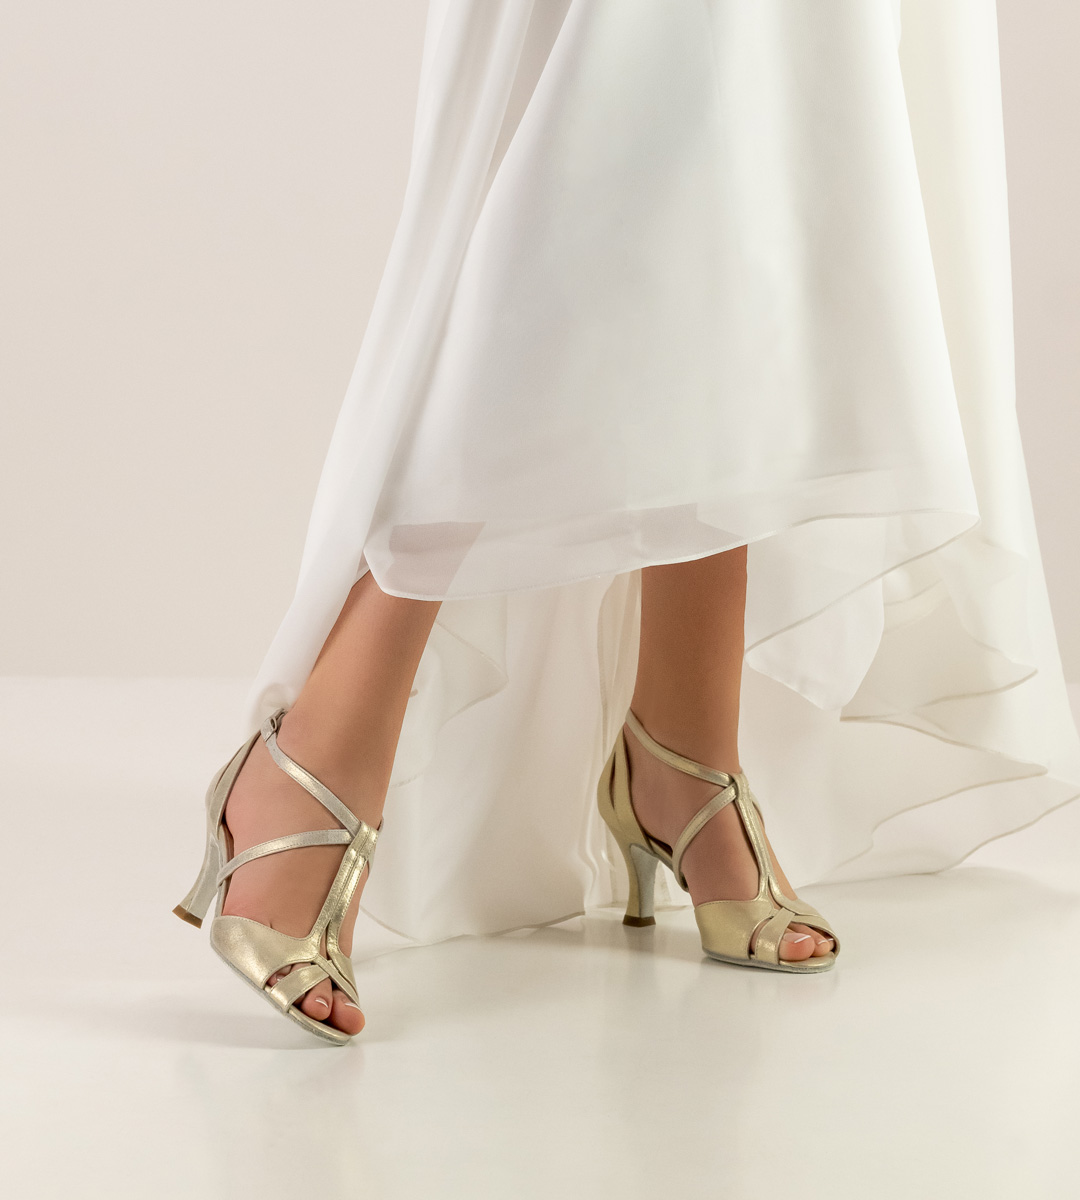 Narrow Werner Kern Wedding Shoe with White Wedding Dress